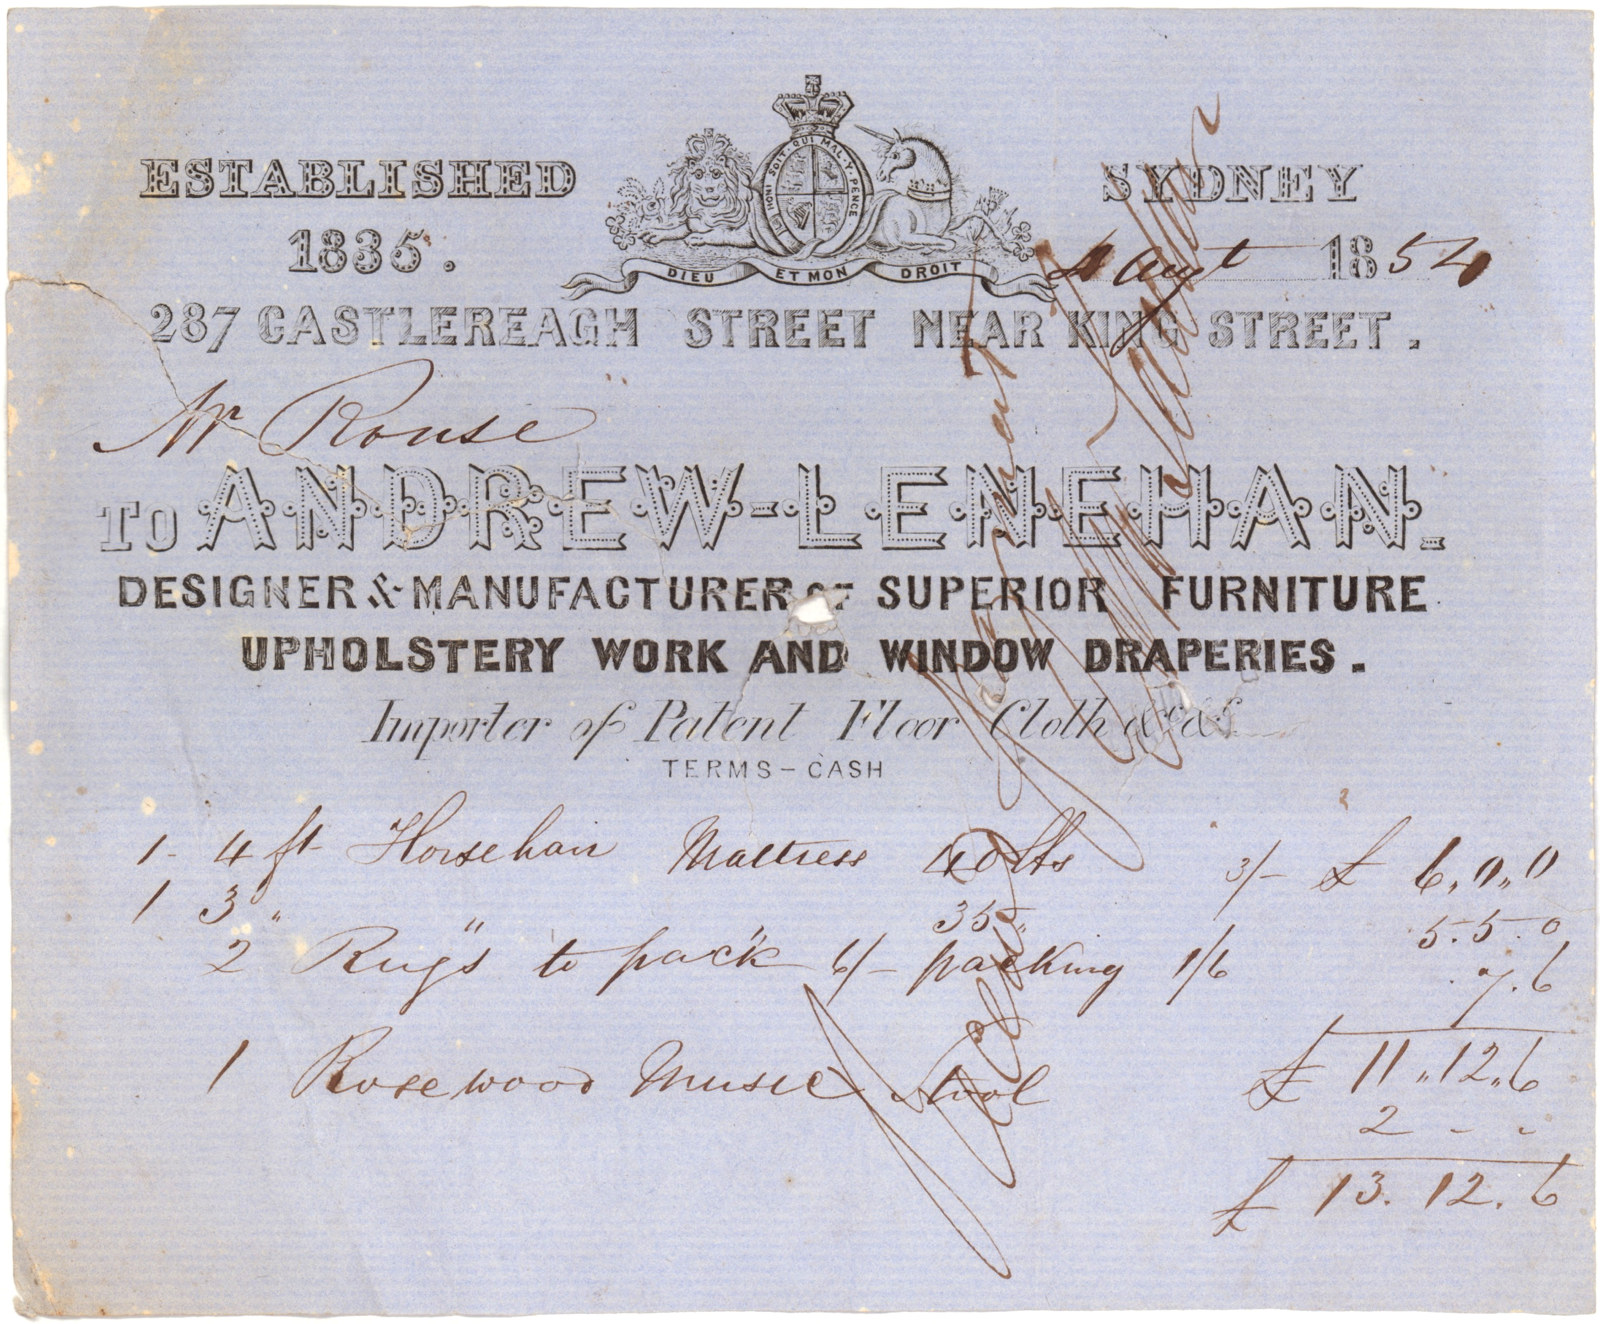 Receipt from Andrew Lenehan, Designer & Manufacturer of Superior Furniture, 1852